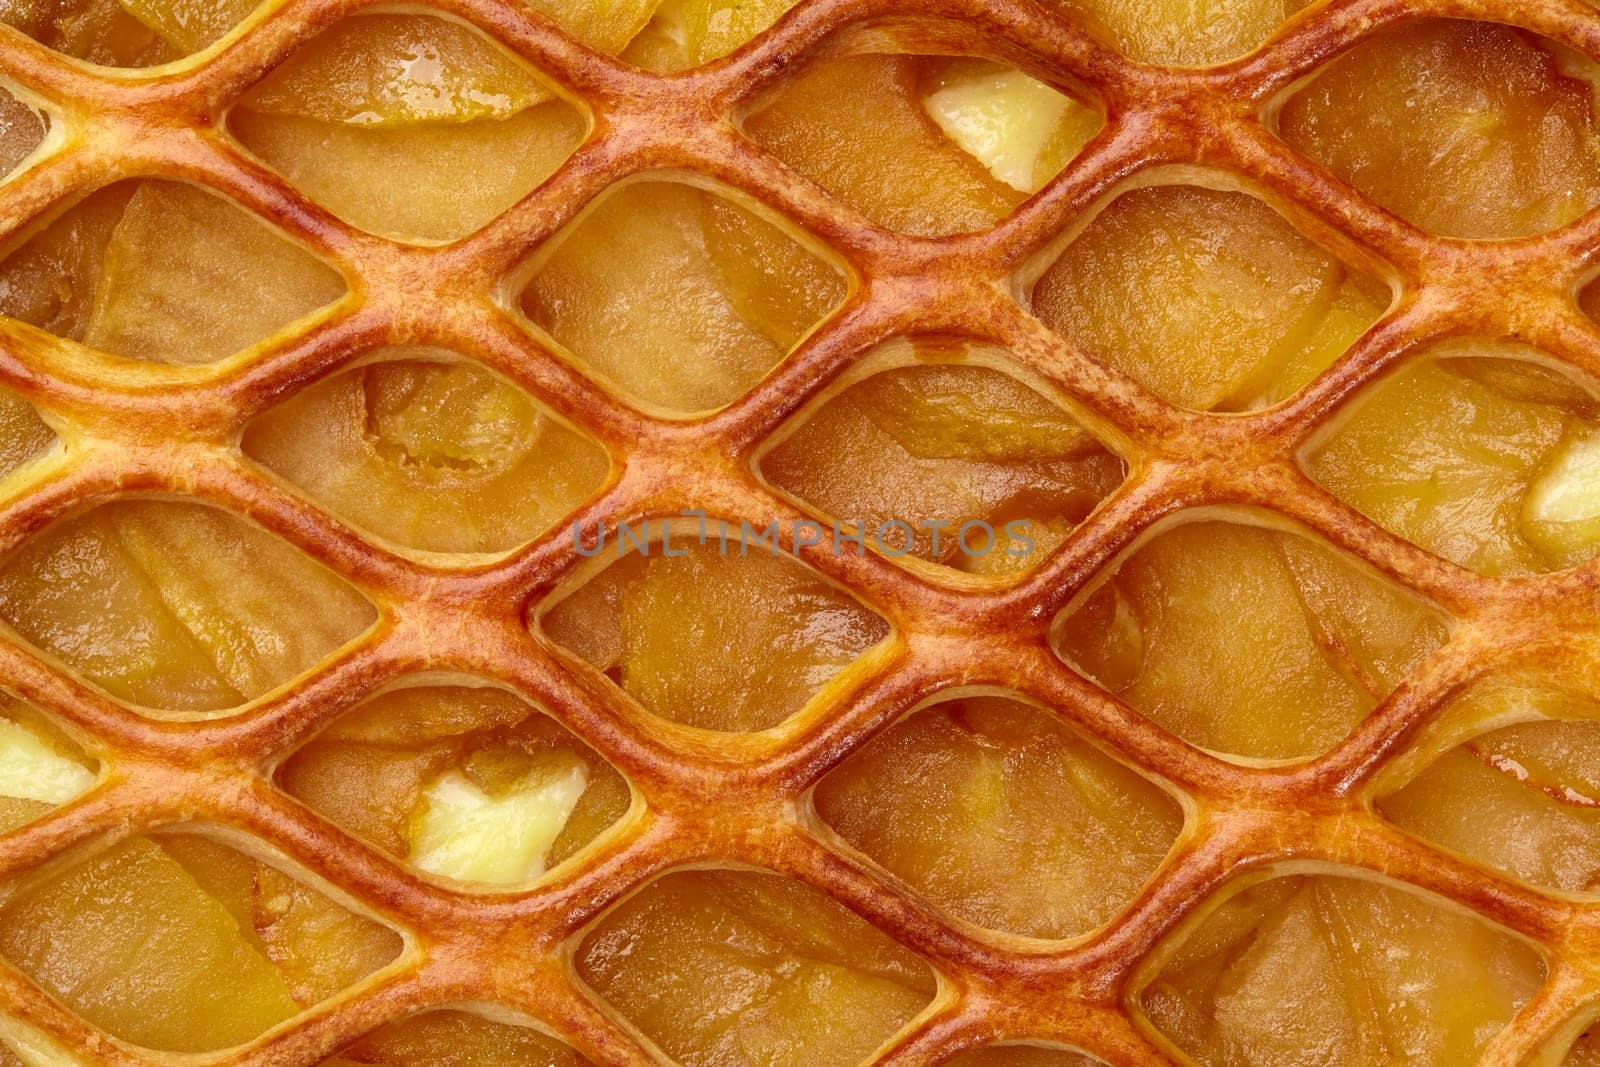 Macro shot of apple pie with tender custard layer and golden lattice crust, showcasing textures and warm tones of popular baked fruit dessert